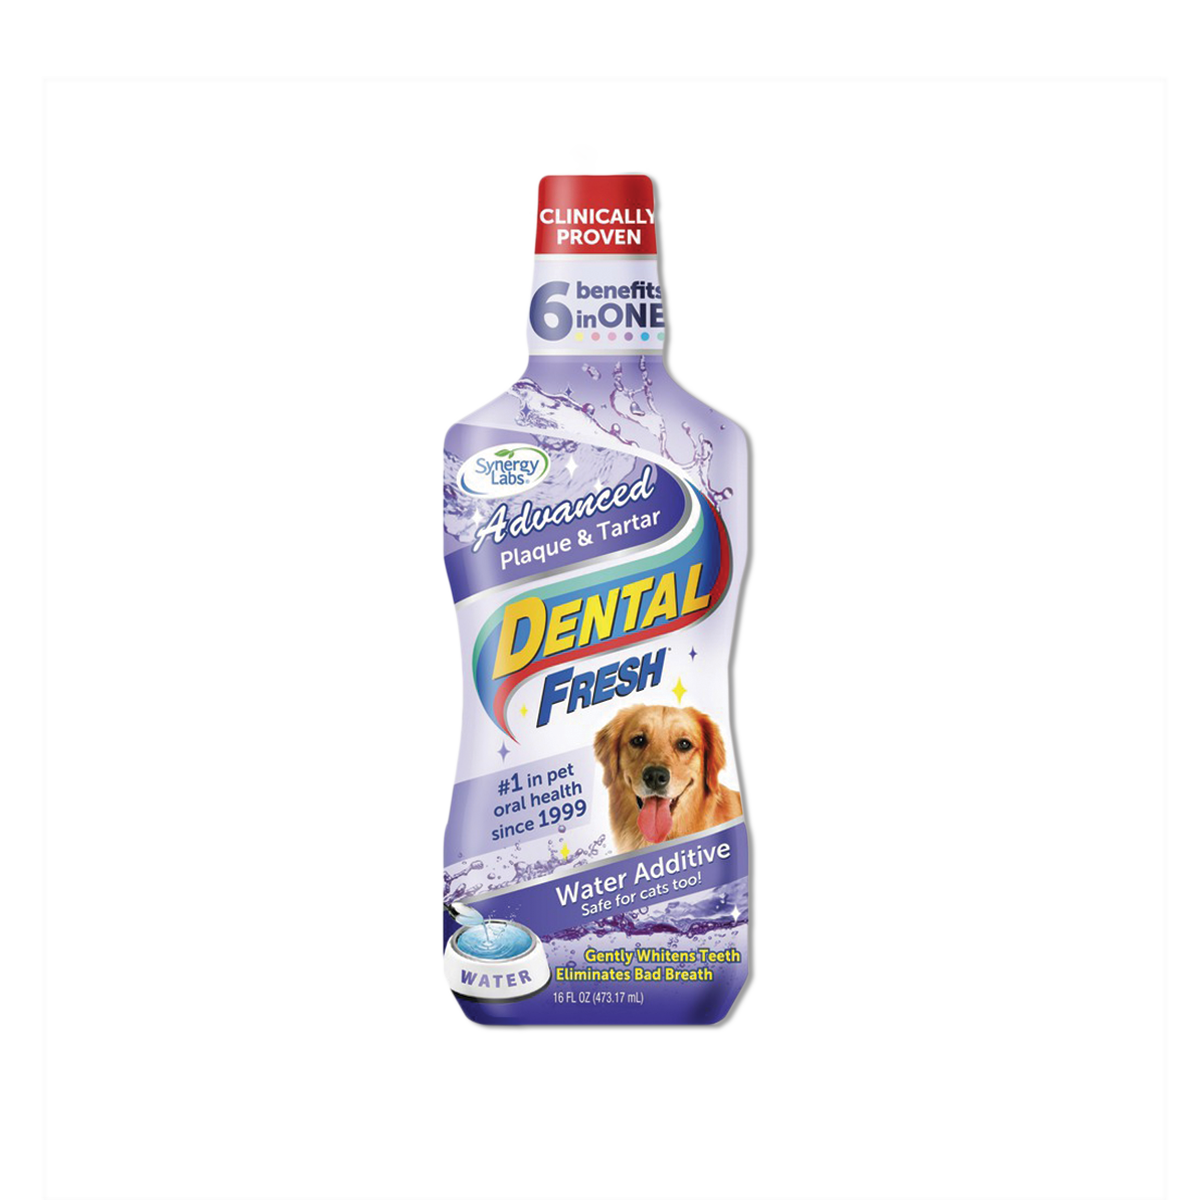 Dental Fresh Advenced Plaque&Tartar เดนทอลเฟรช น้ำยาทำความสะอาดช่องปากและฟันสุนัขสูตรขจัดคราบและหินปูน ขนาด 17 ออนซ์ (503 มล.)